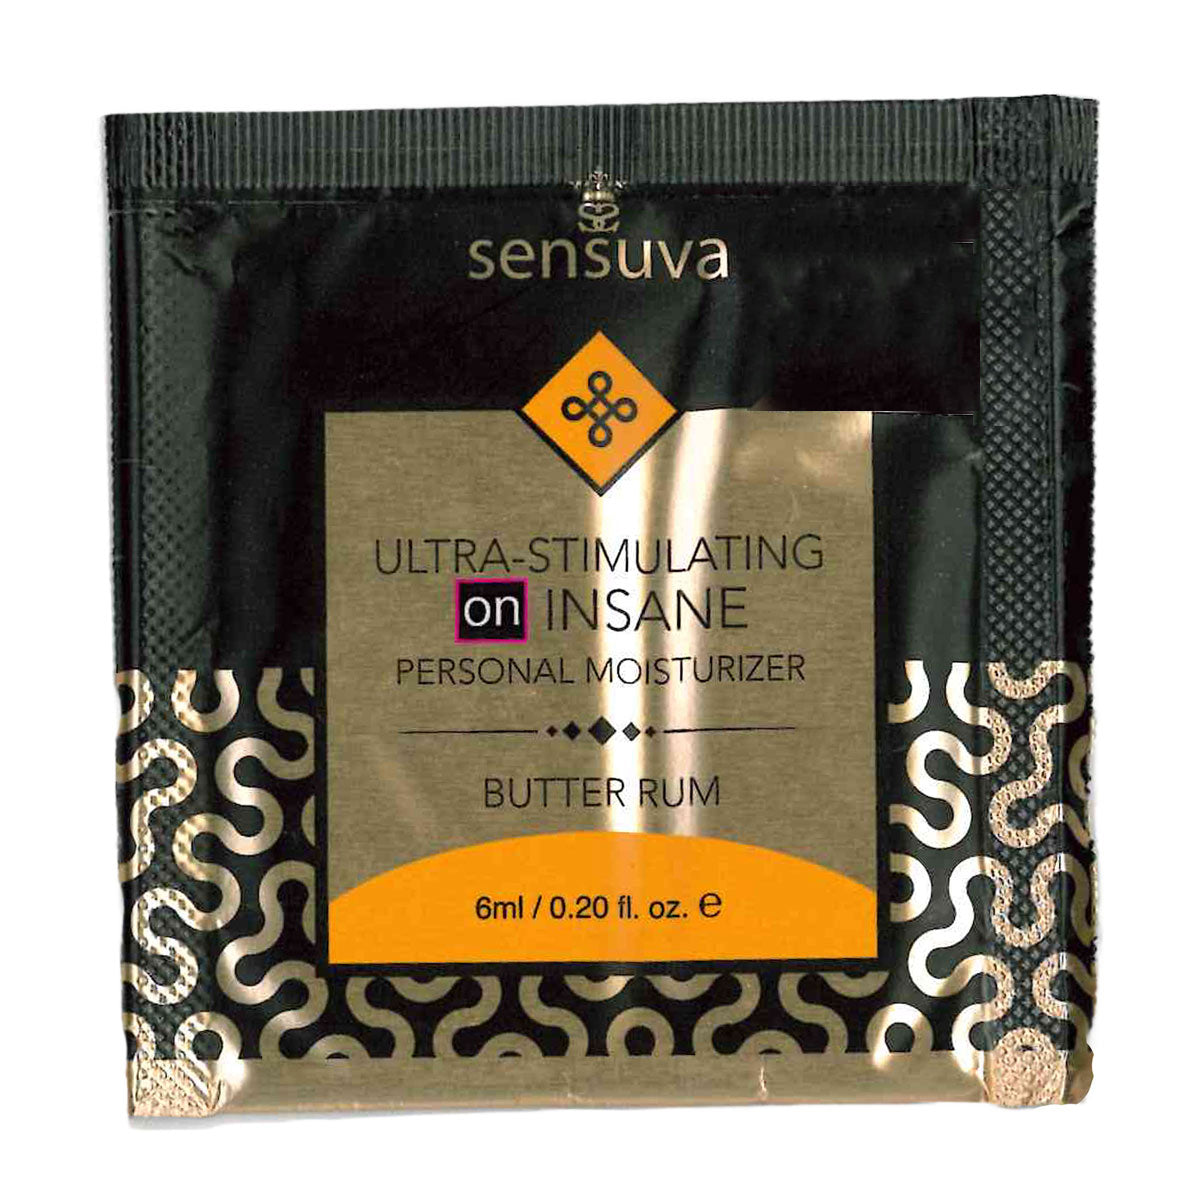 Sensuva – Ultra-Stimulating ON INSANE - Butter Rum - Foil 6ml/0.20 fl oz.